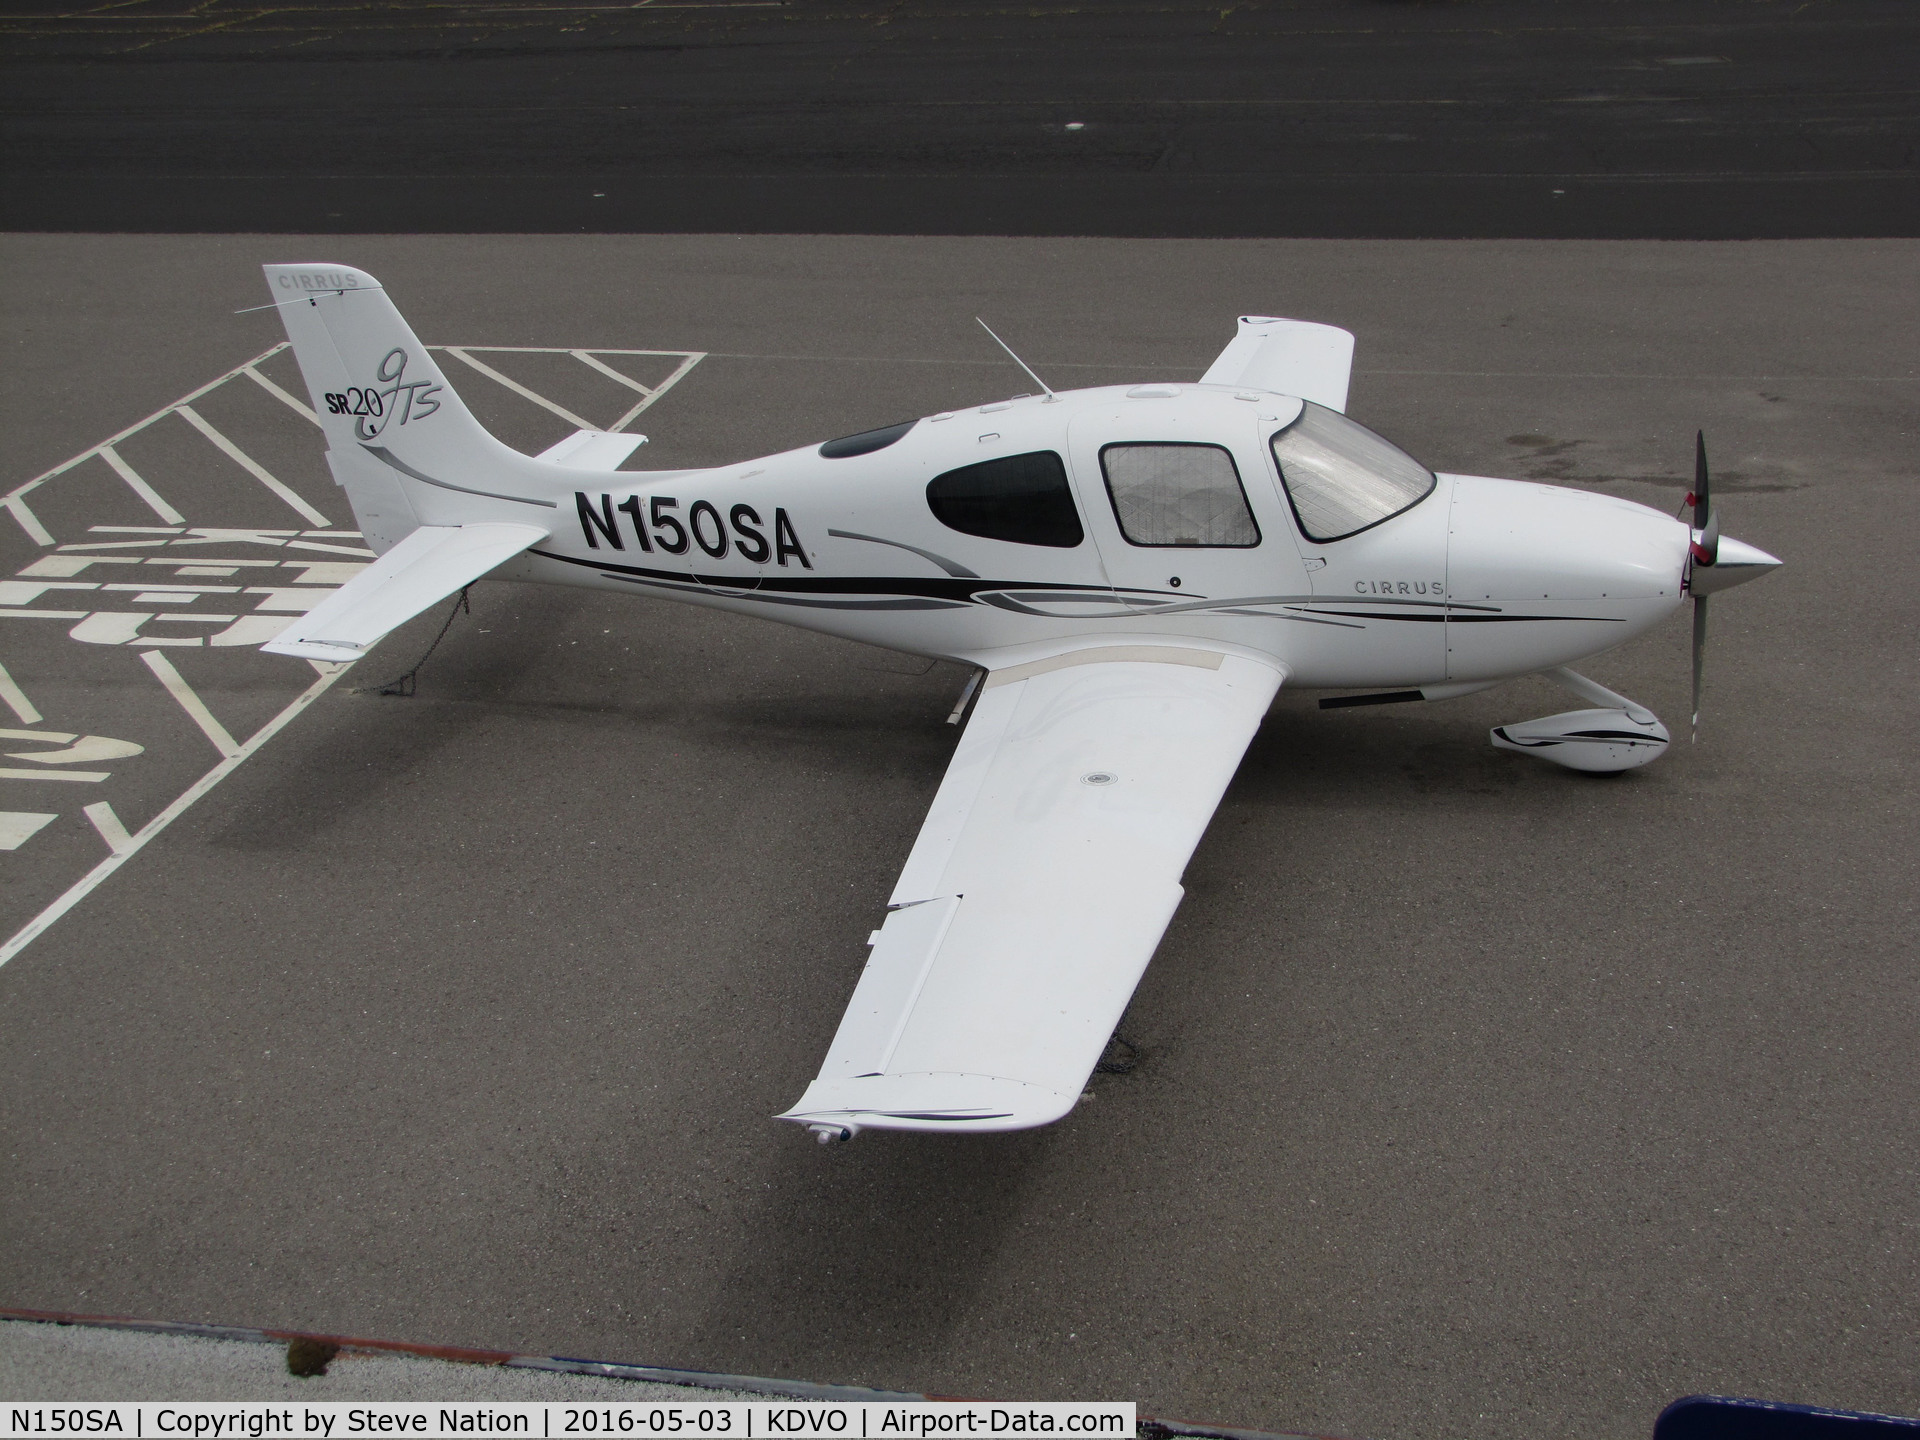 N150SA, 2007 Cirrus SR20 GTS C/N 1863, Feehan Aviation (Sausalito, CA) 2007 Cirrus SR20 from observation deck @ Gnoss Field, Novato, CA